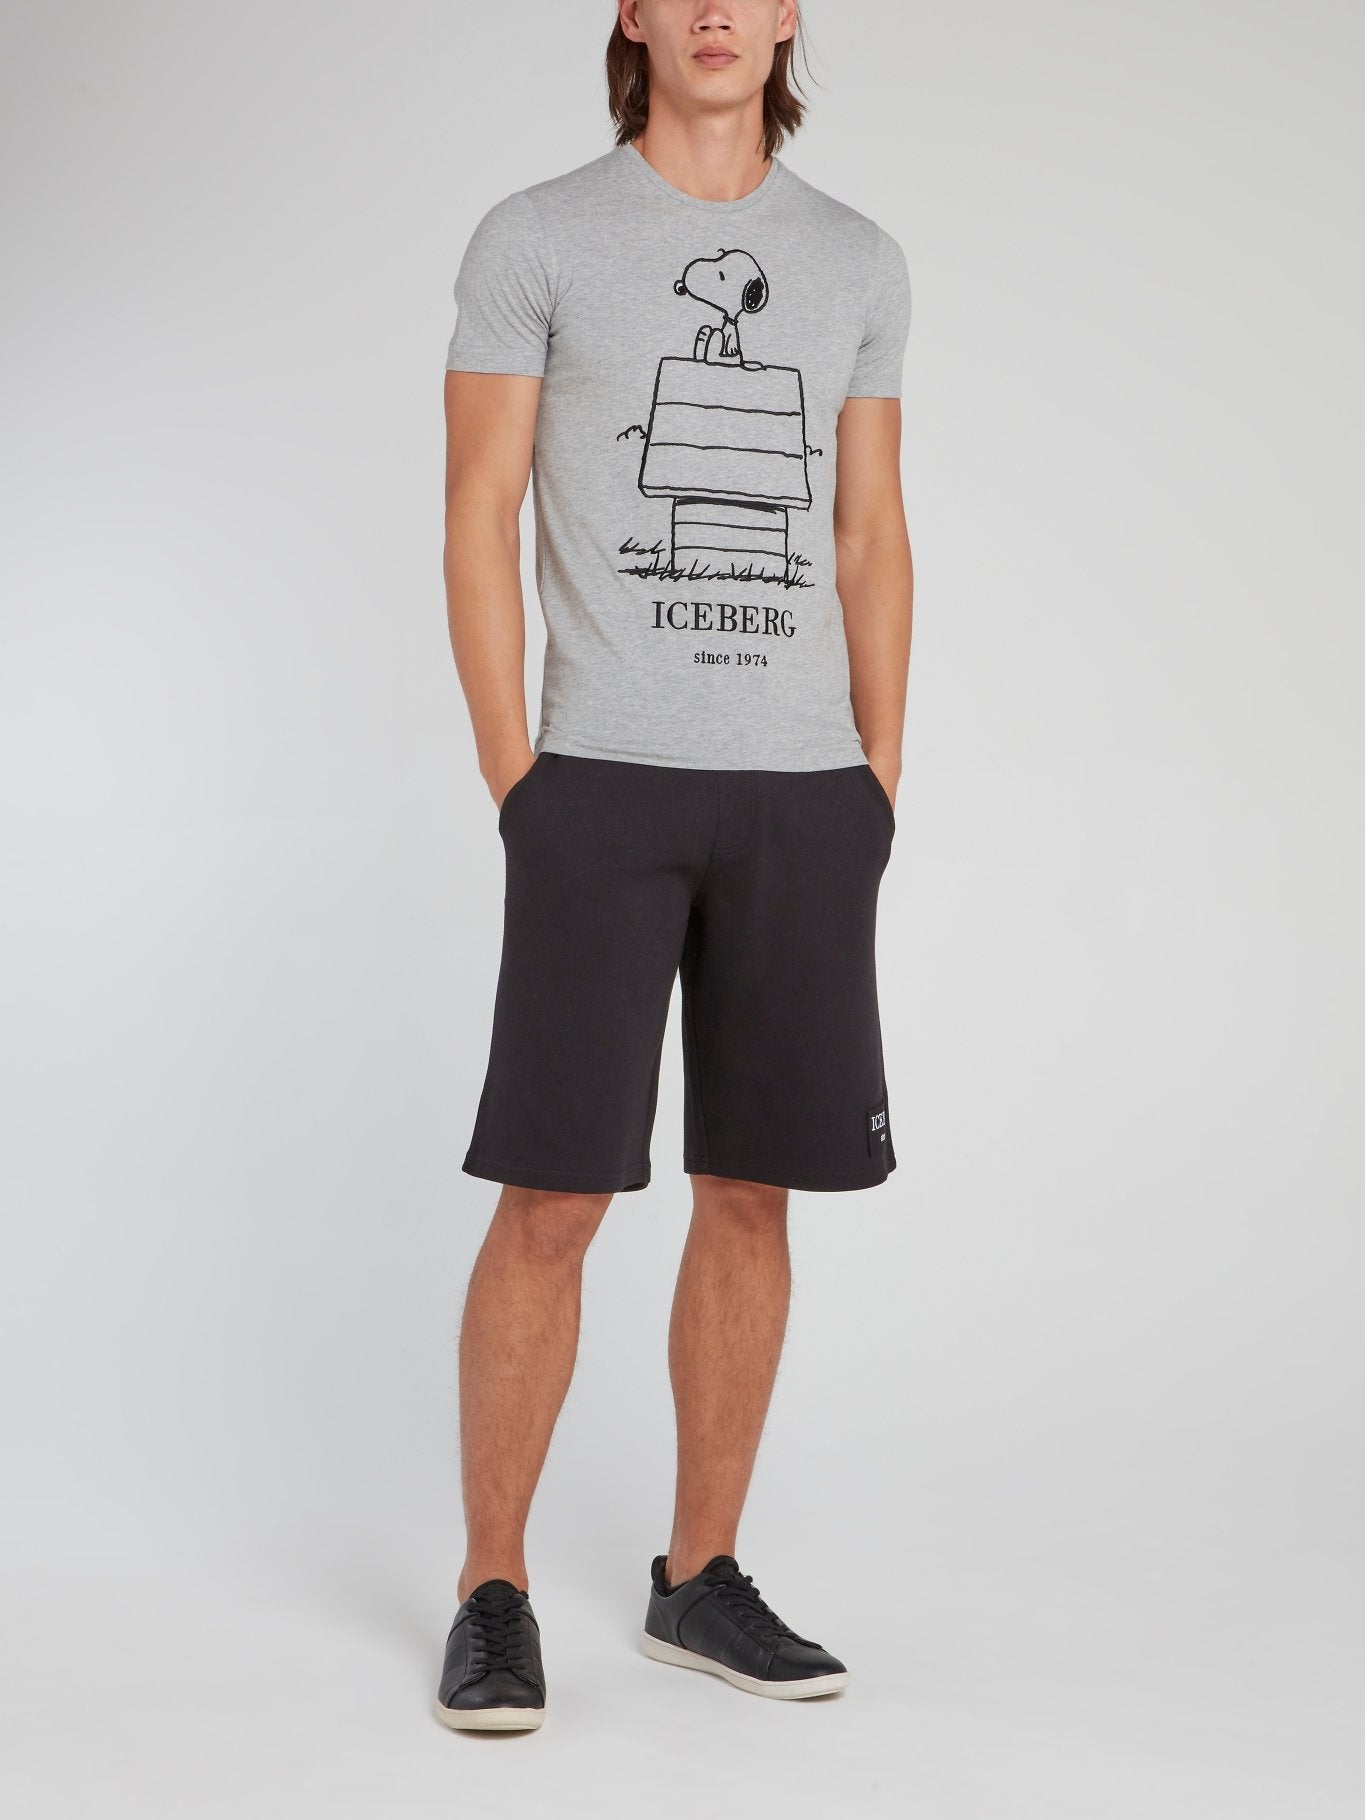 Snoopy Sketch Grey Cotton T-Shirt